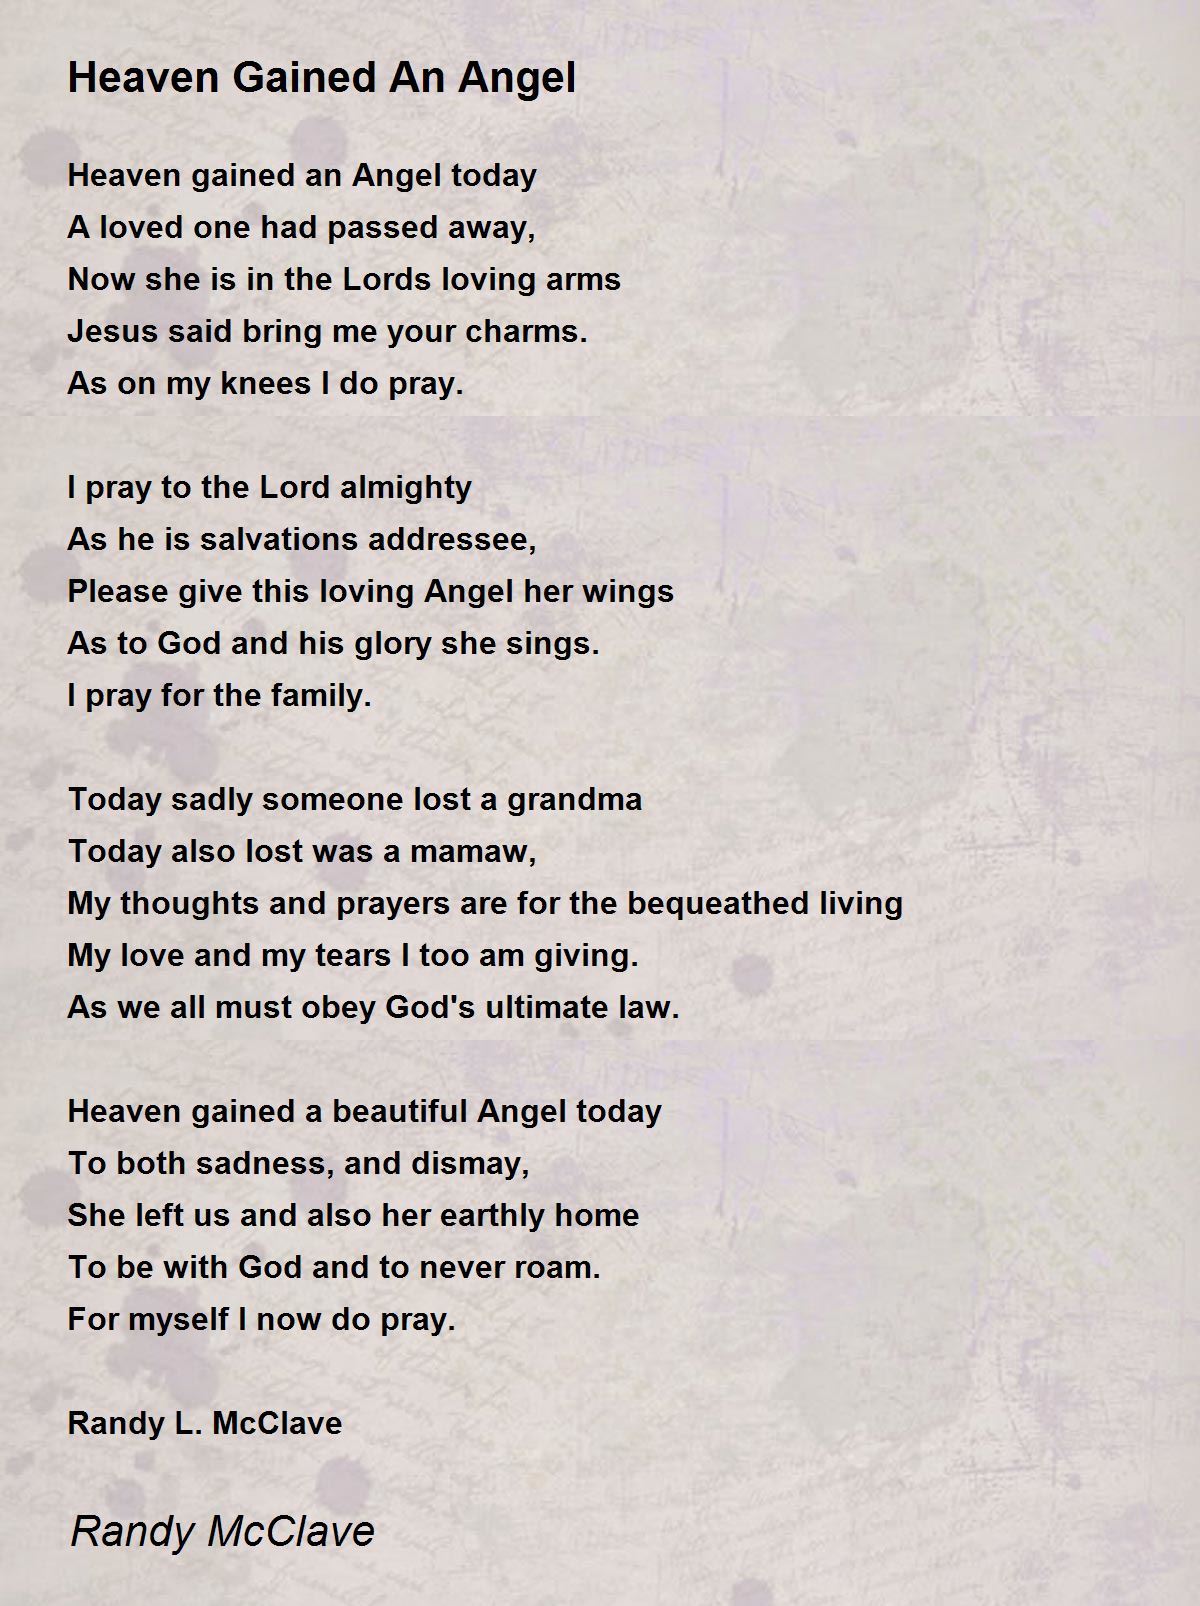 angels in heaven poems